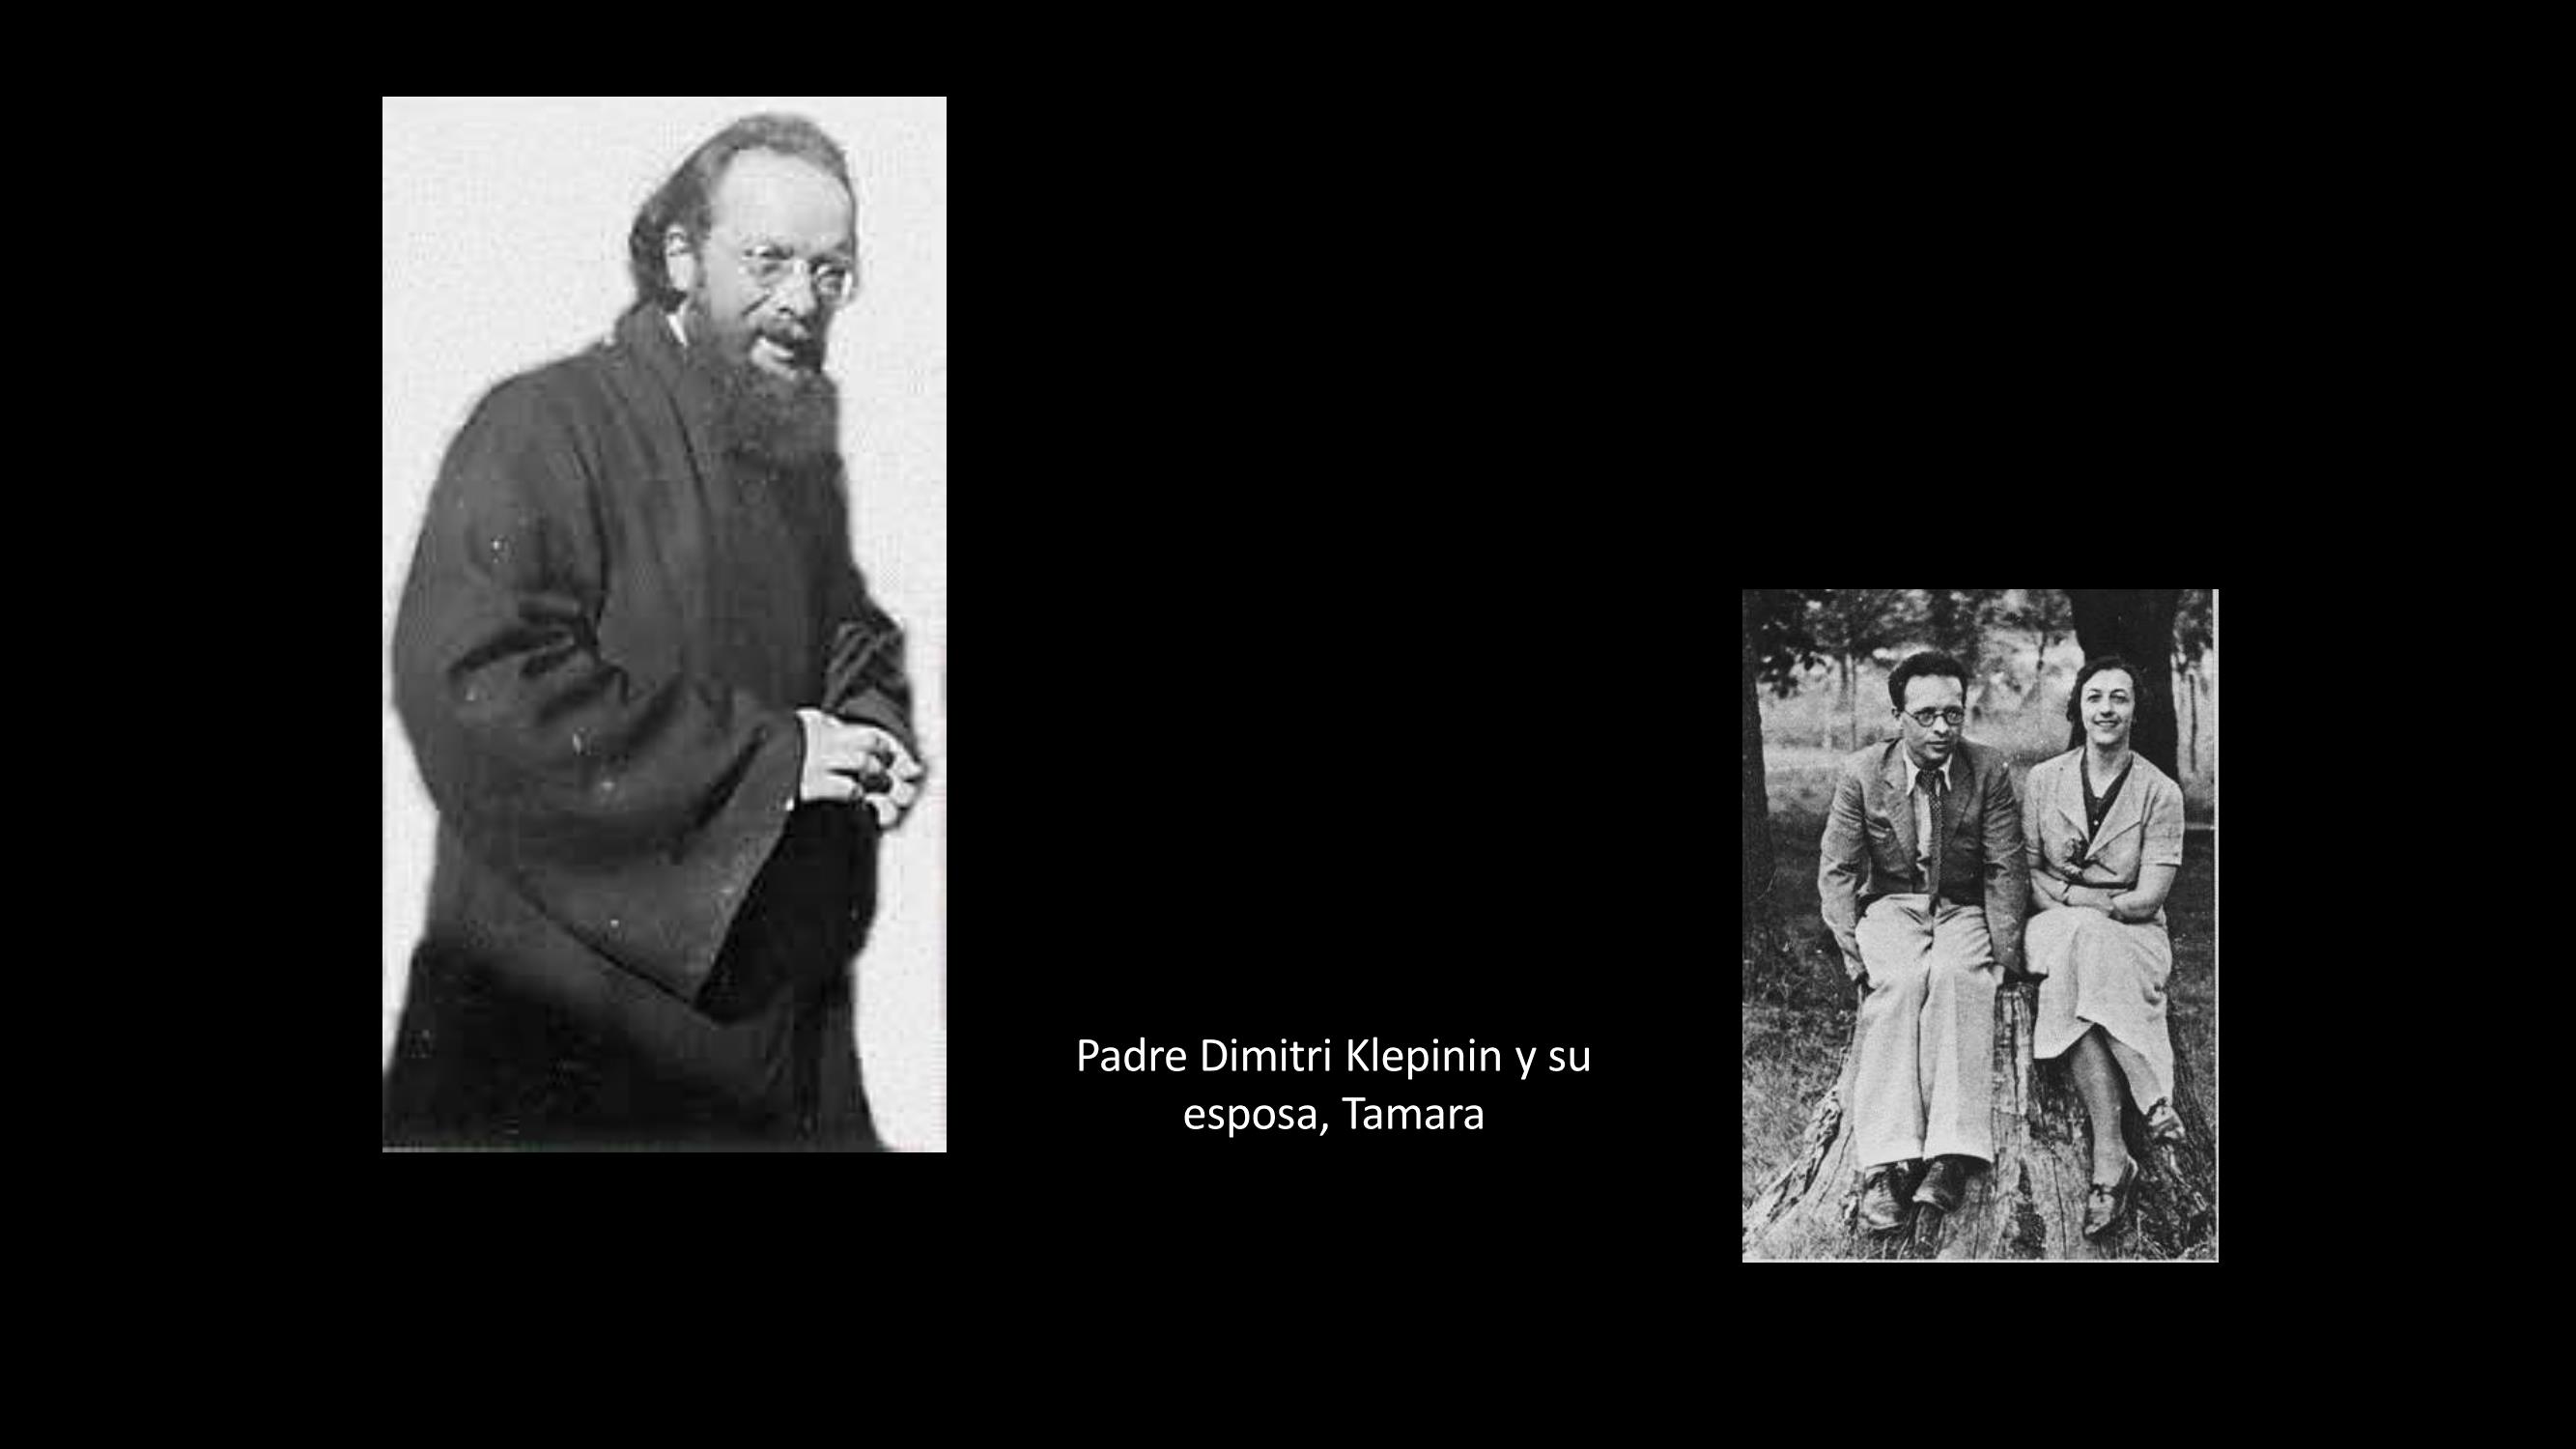 [46] Padre Dimitri Klepinin e sua esposa, Tamara